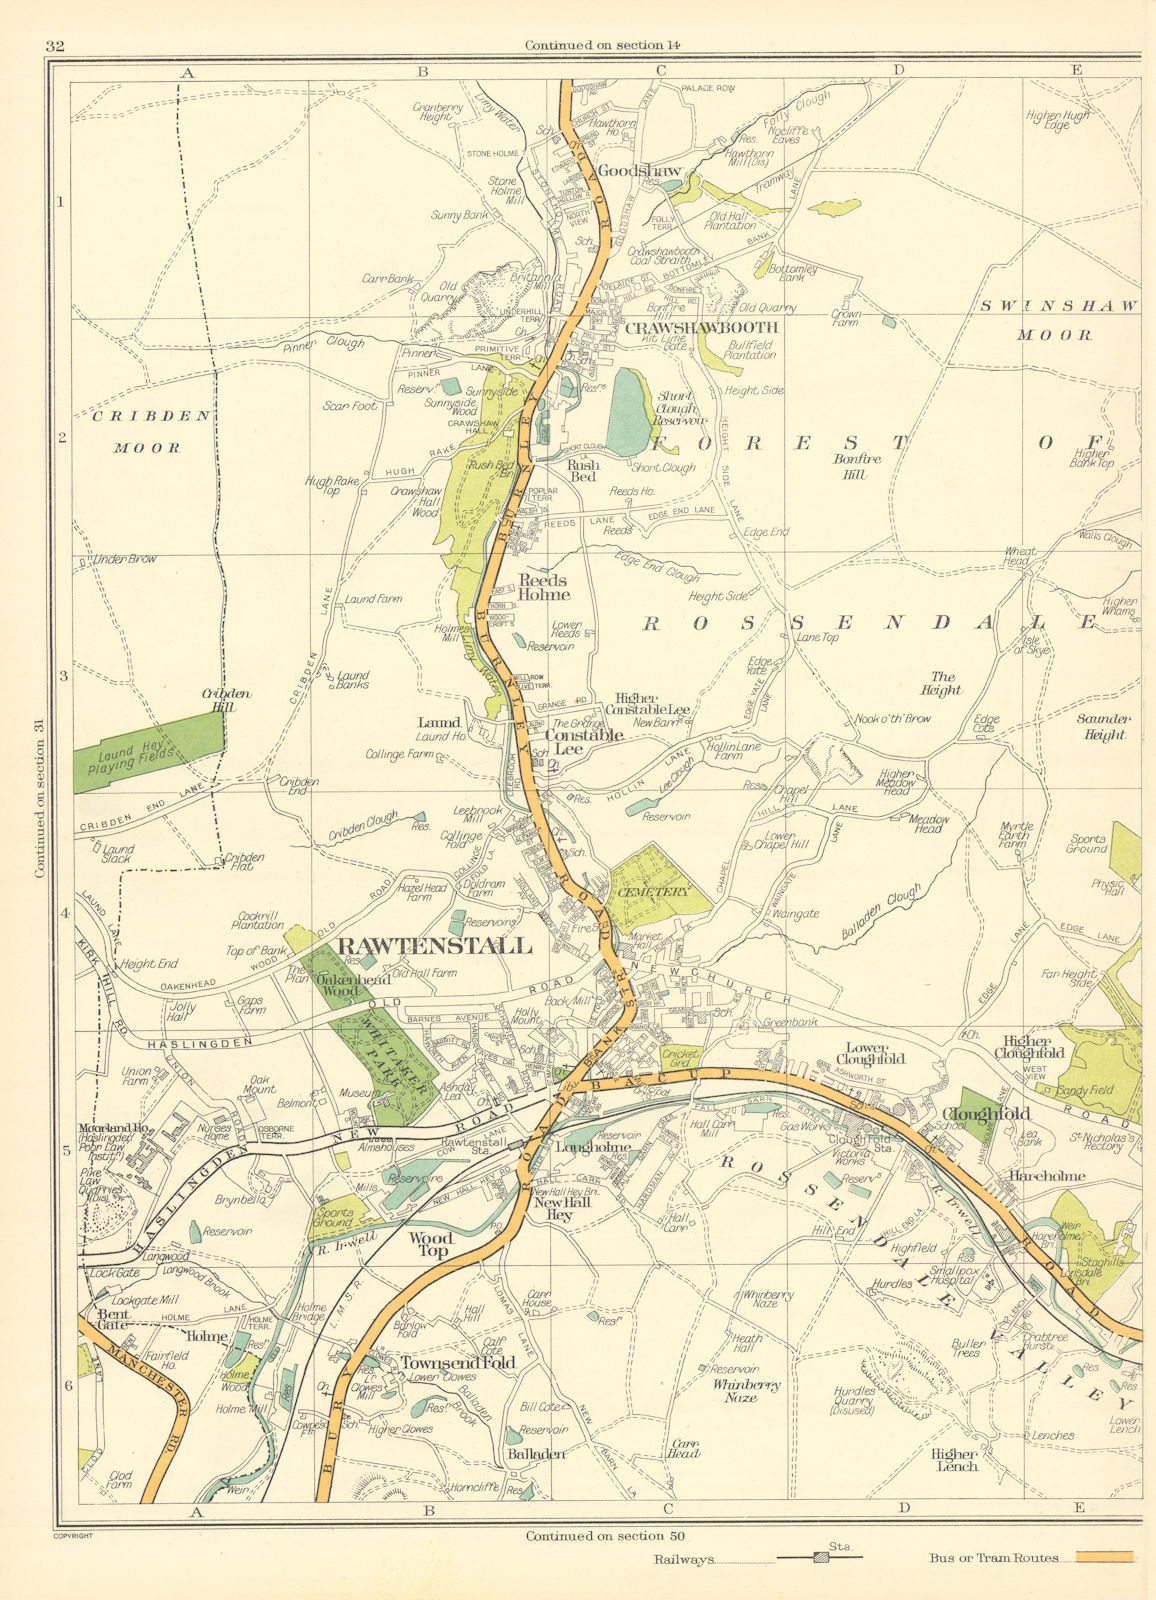 LANCS Rawtenstall Wood Top Rossendale Crawshawbooth Goodshaw Townsend 1935 map